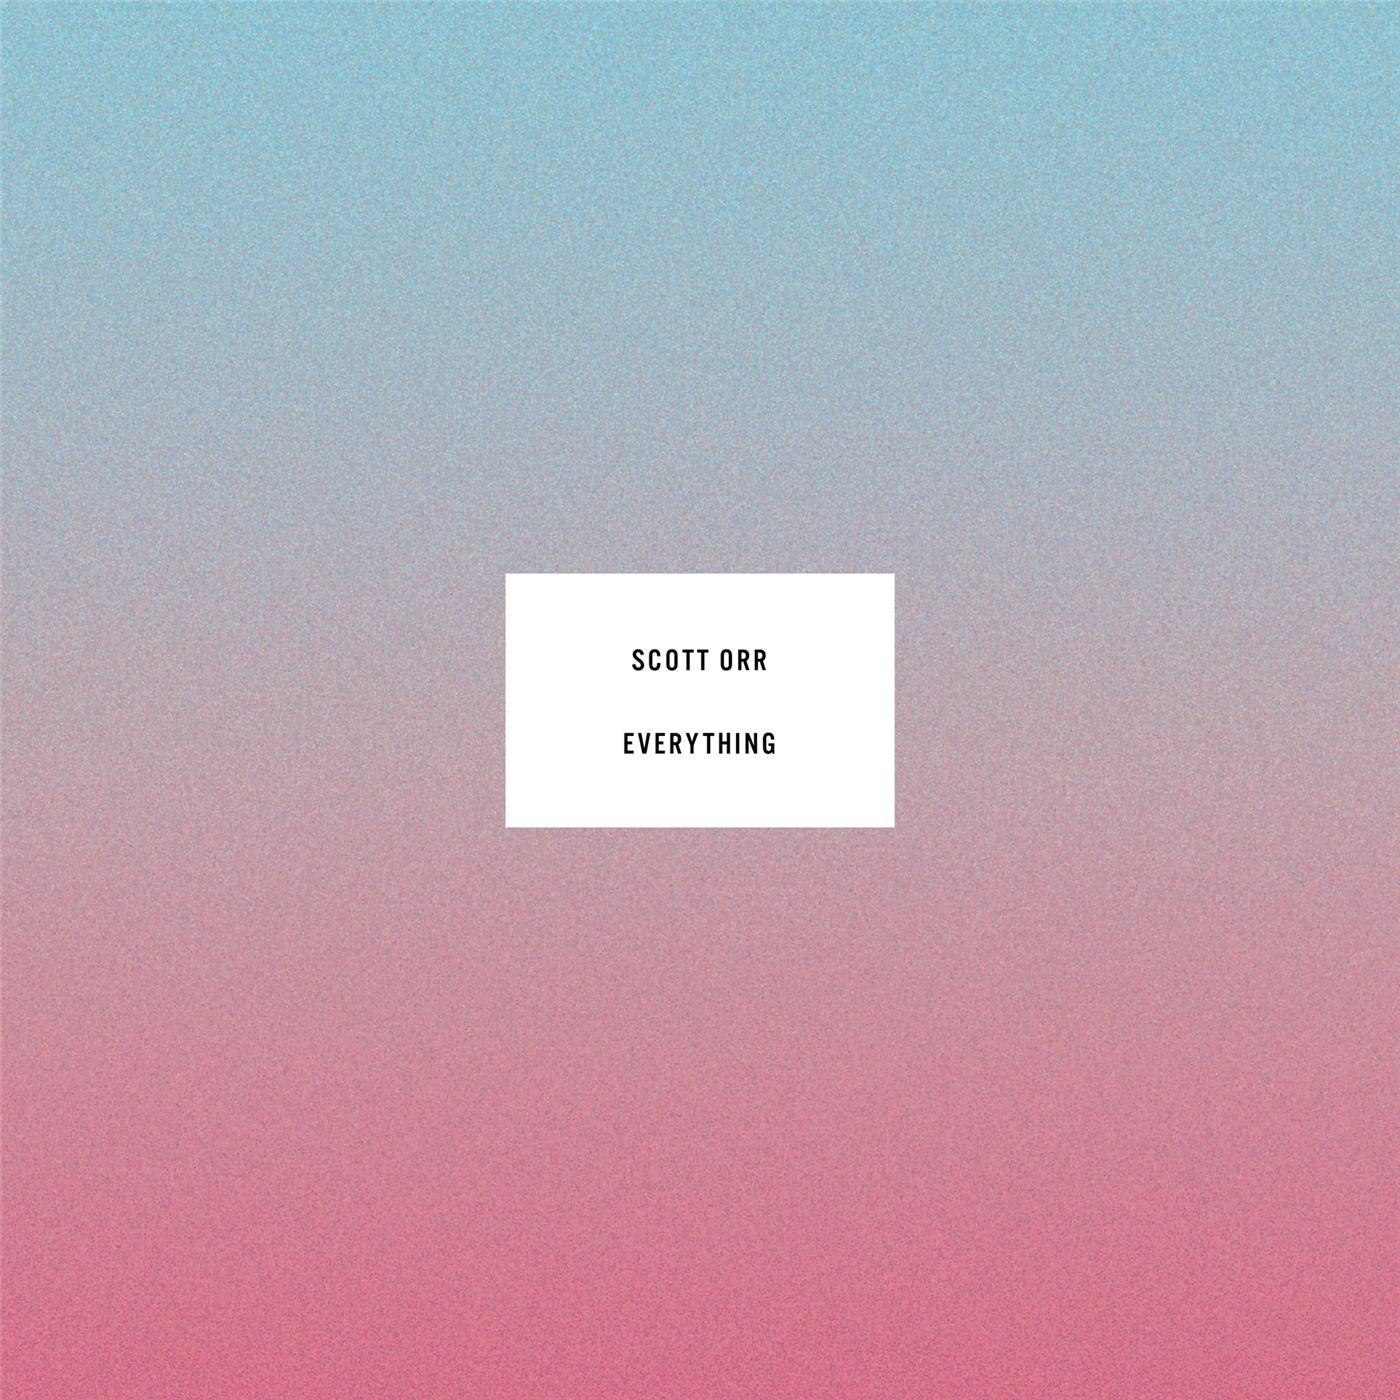 By the Way歌词 歌手Scott Orr-专辑Everything-单曲《By the Way》LRC歌词下载